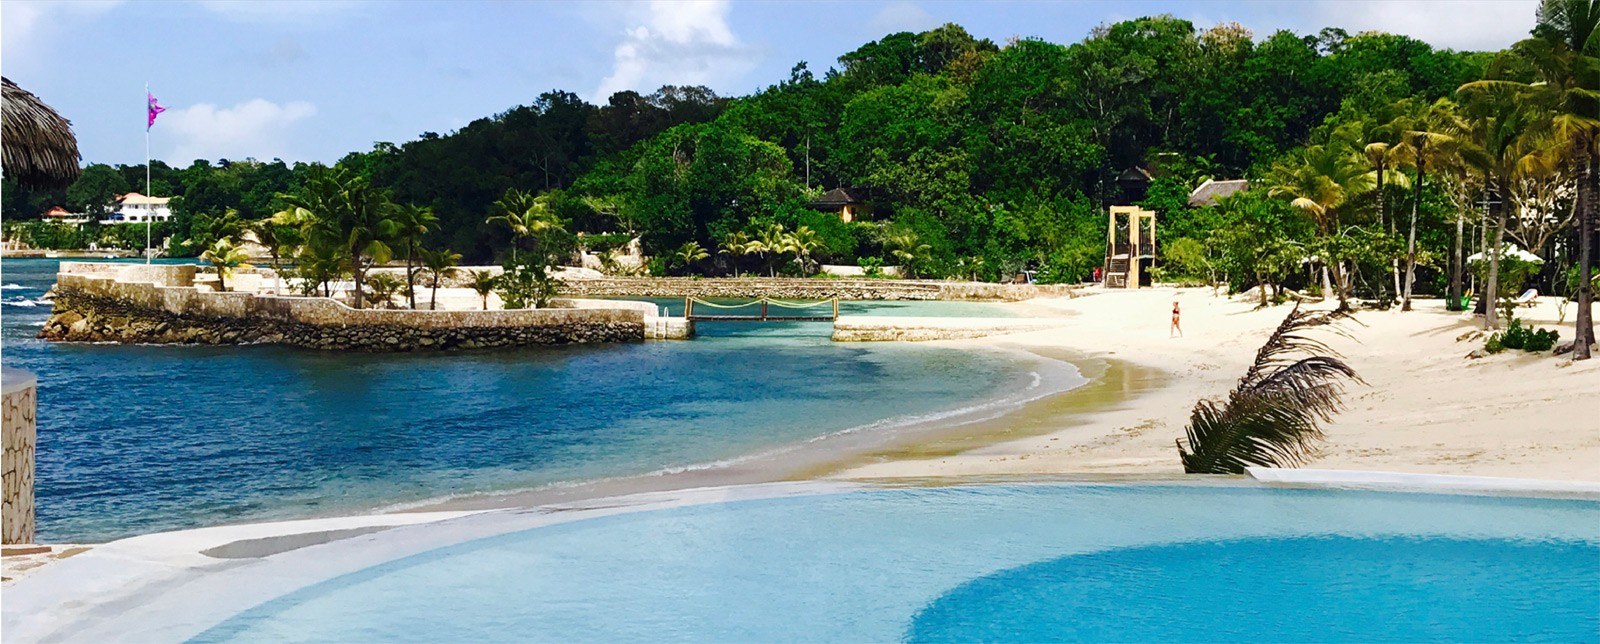 Golden Eye Hotel and Resort - a Jamaican retreat where Sir Ian